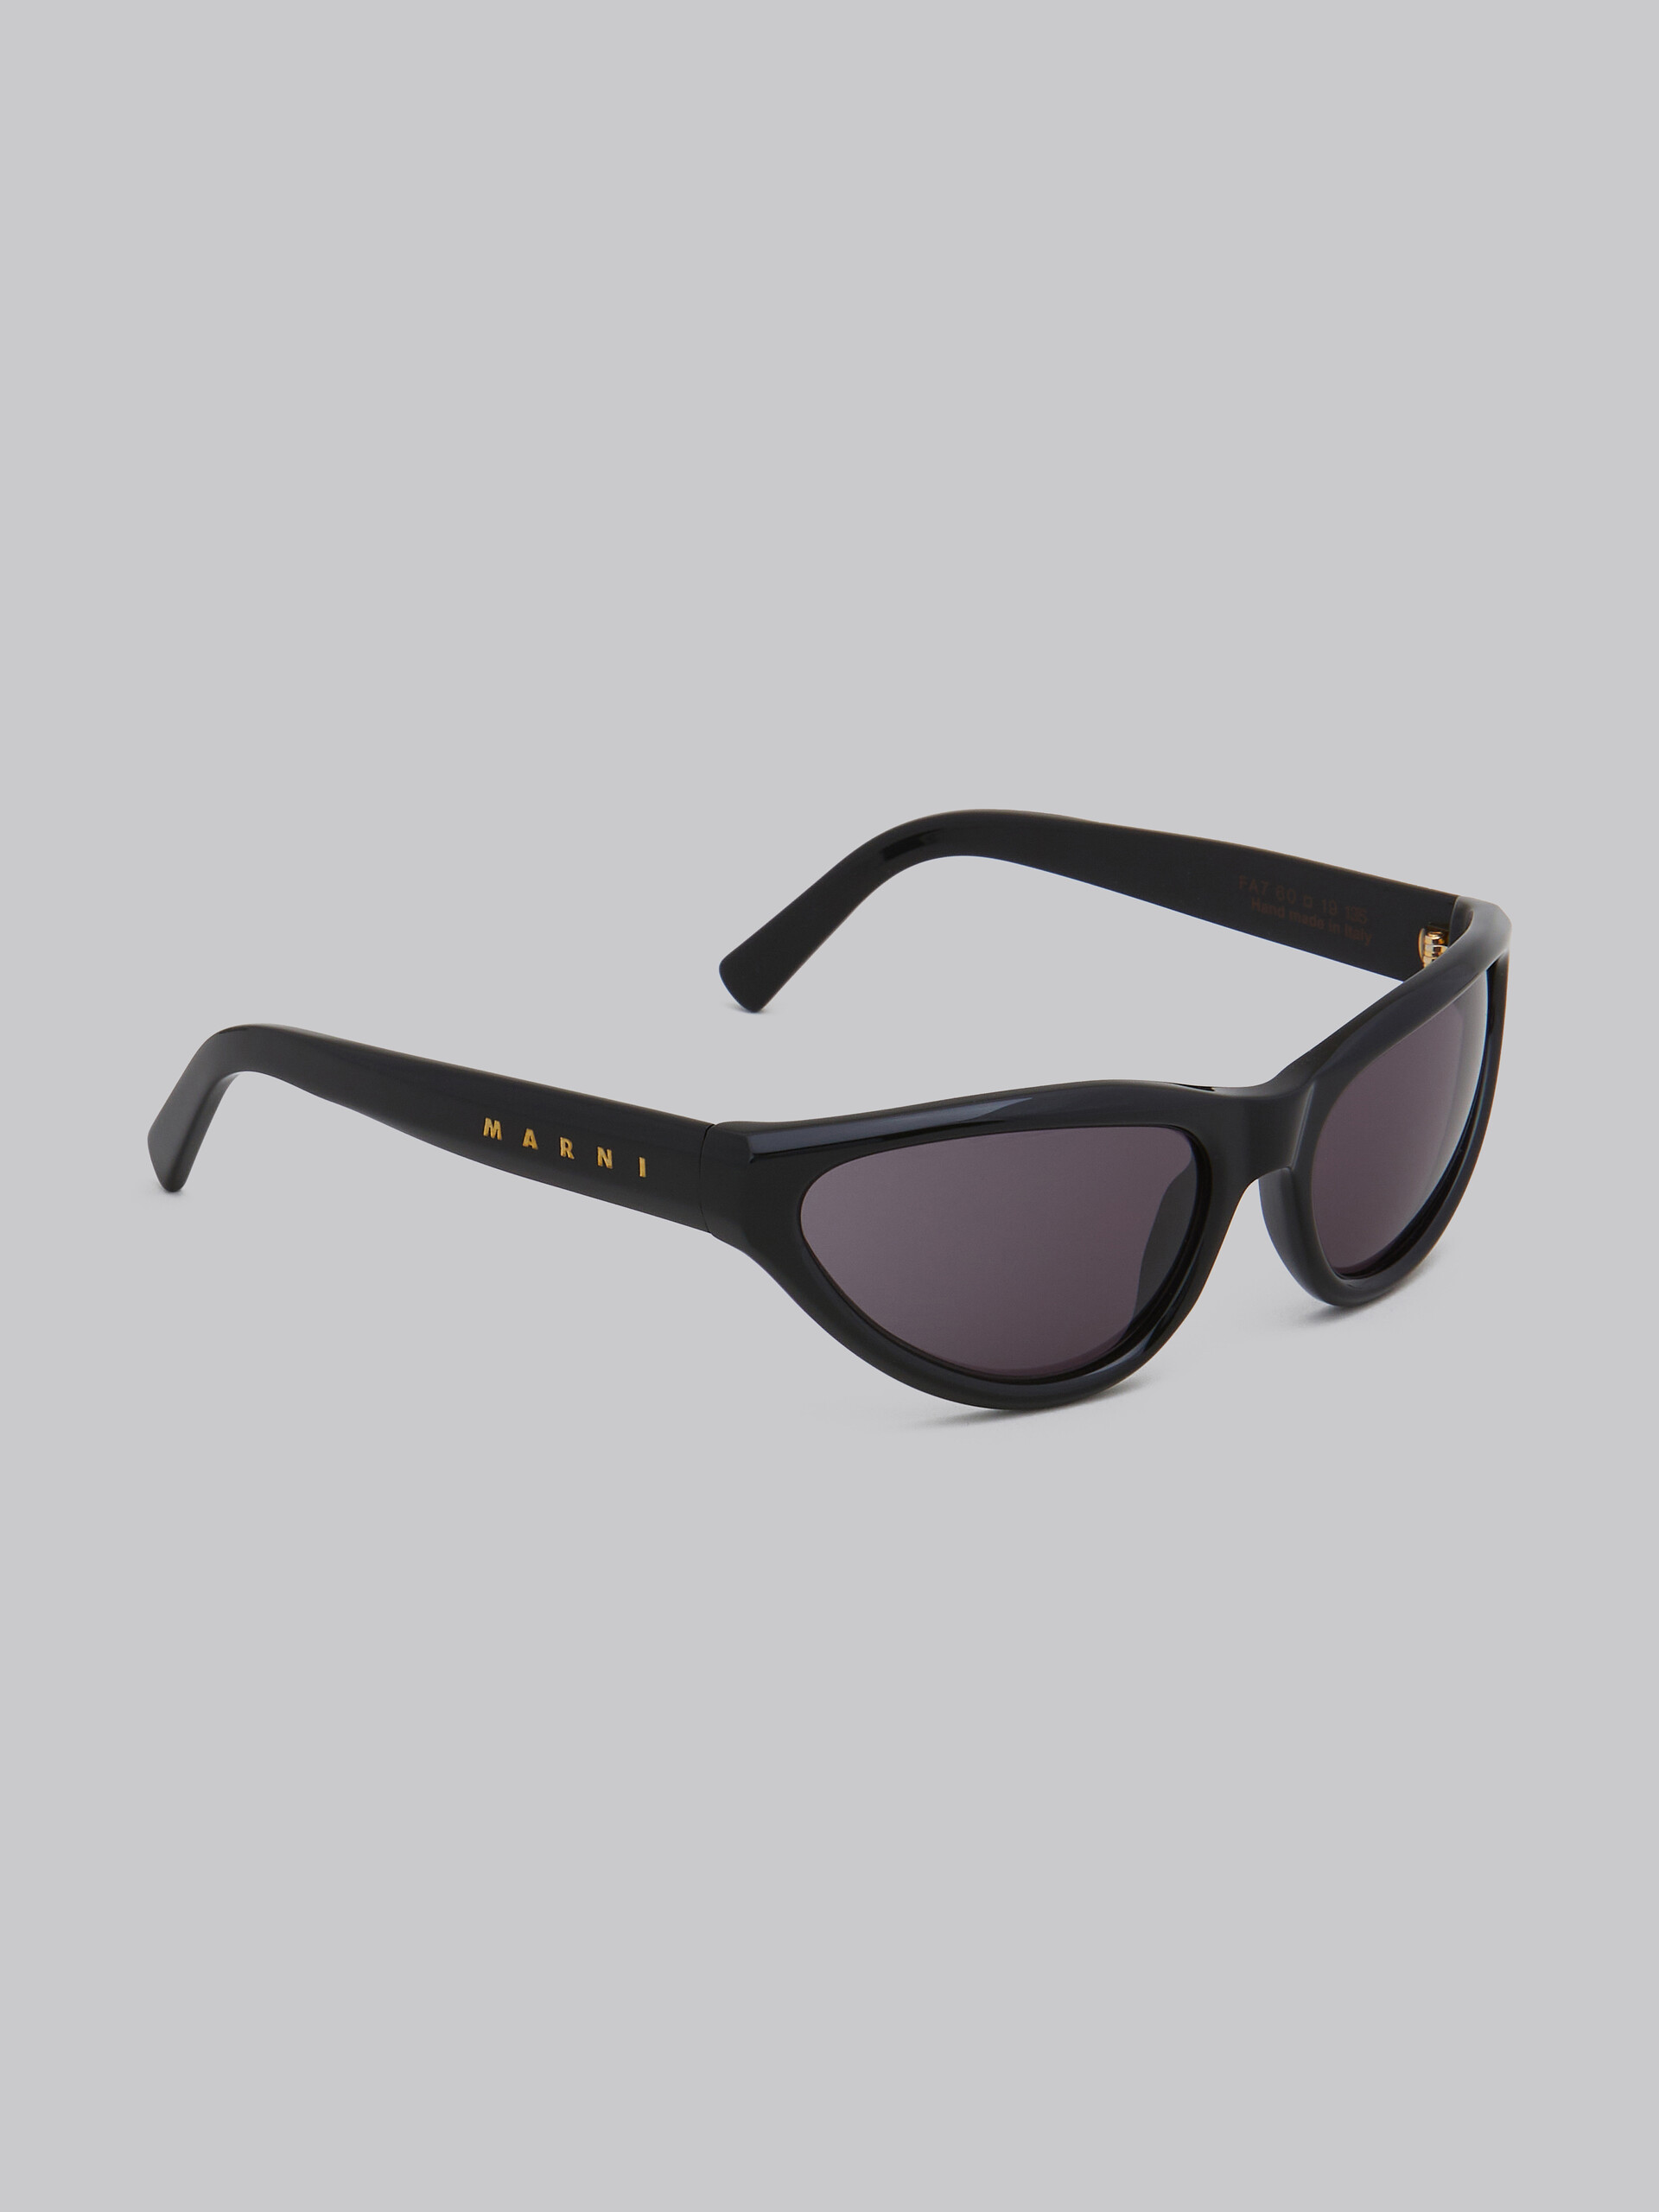 Mavericks black sunglasses - Optical - Image 3